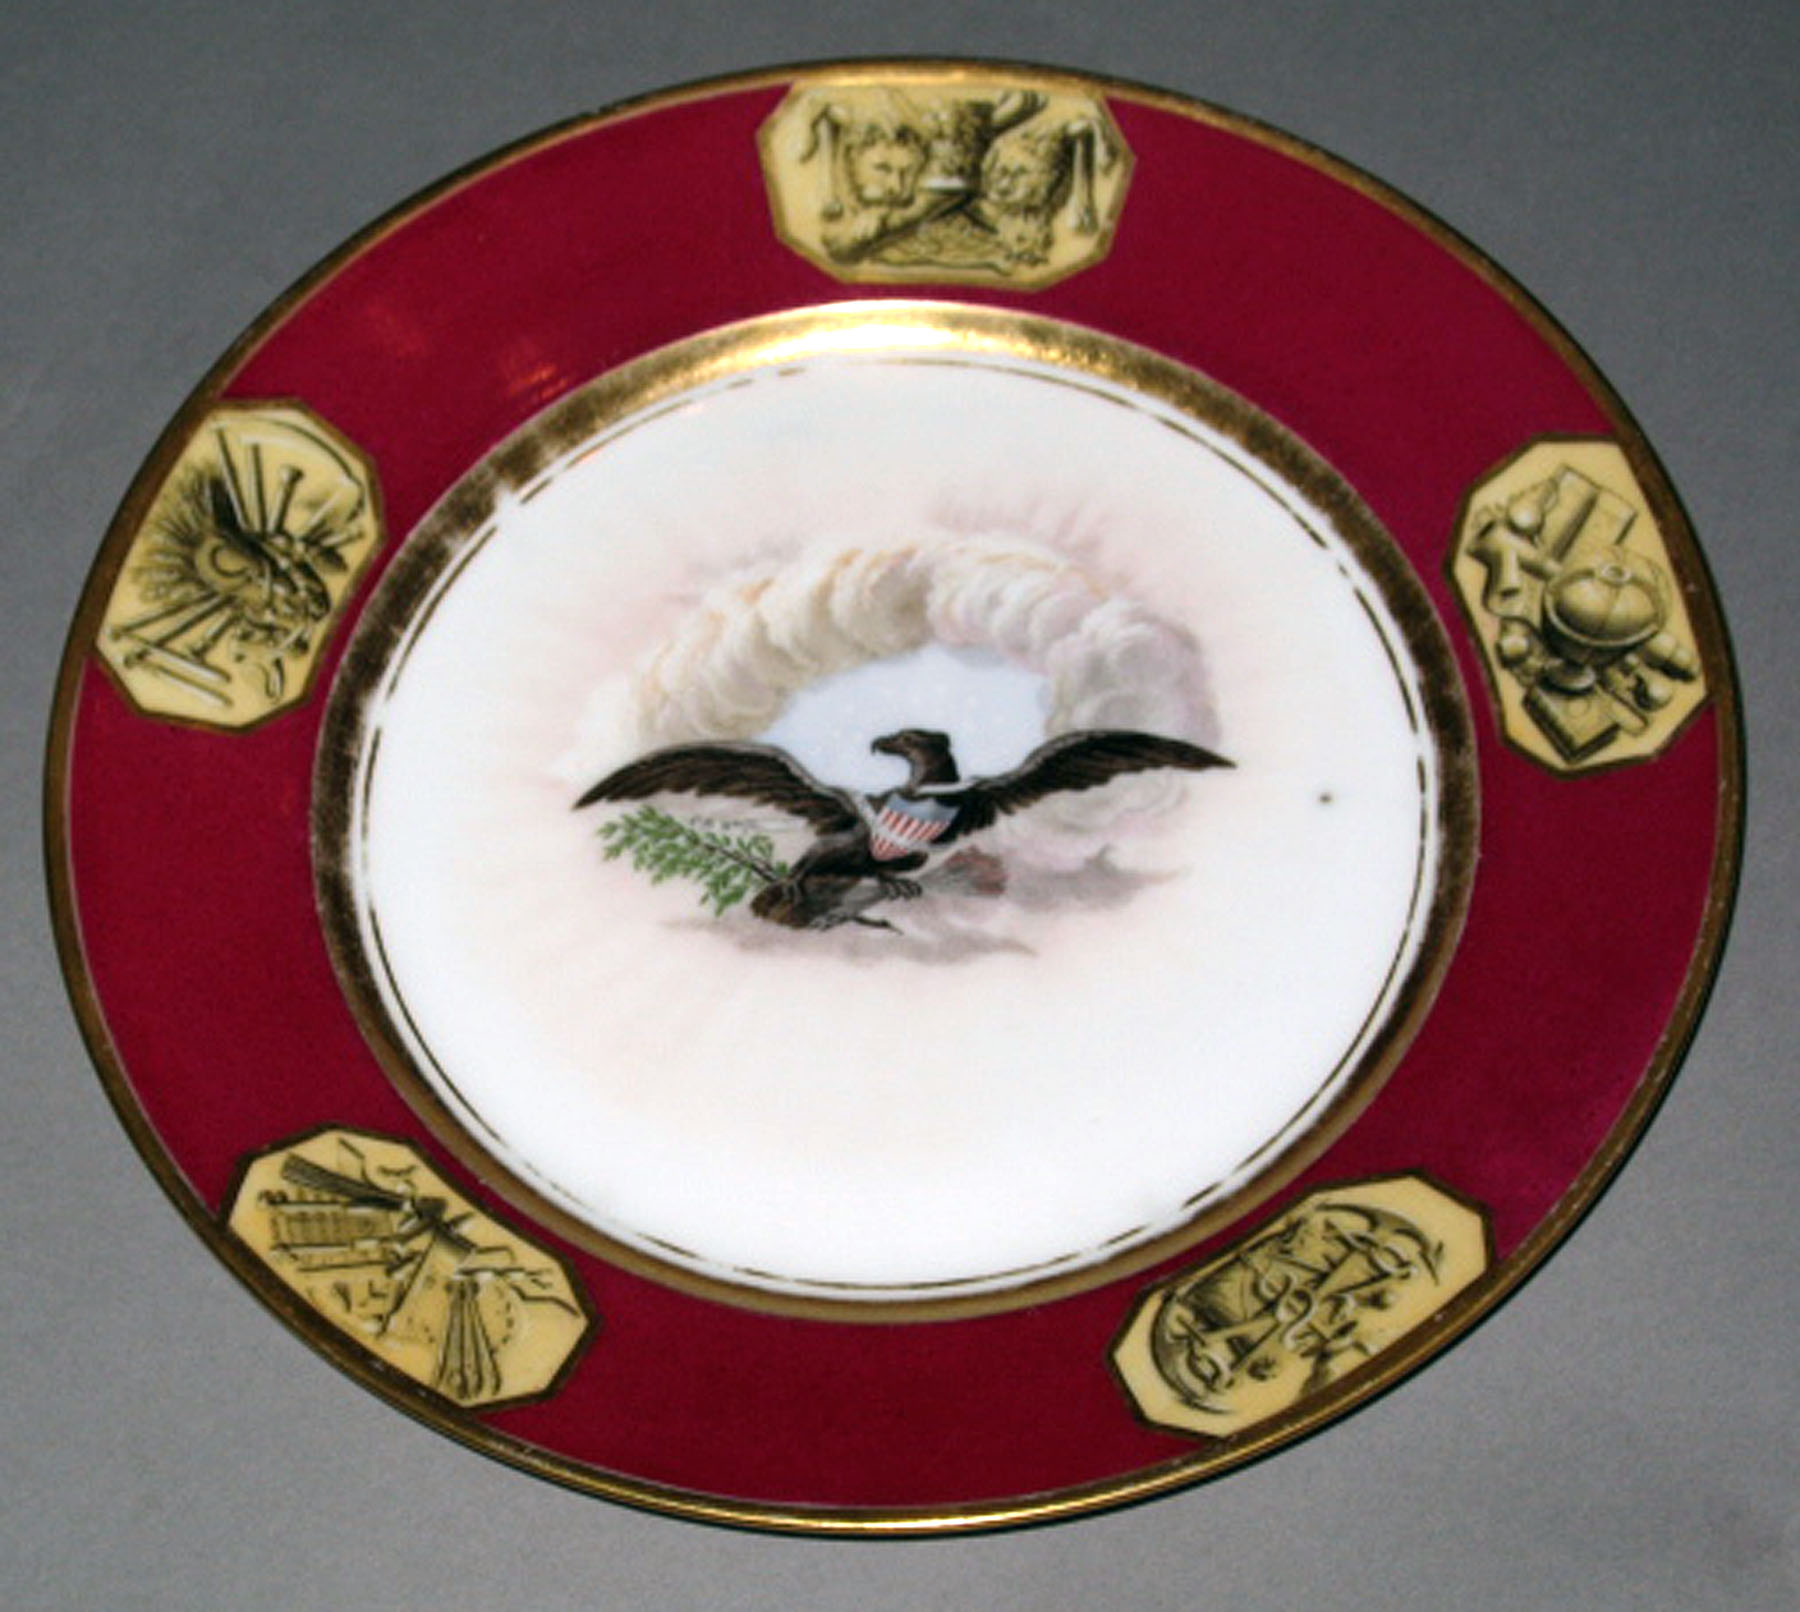 1958.1606.007 Porcelain dessert plate